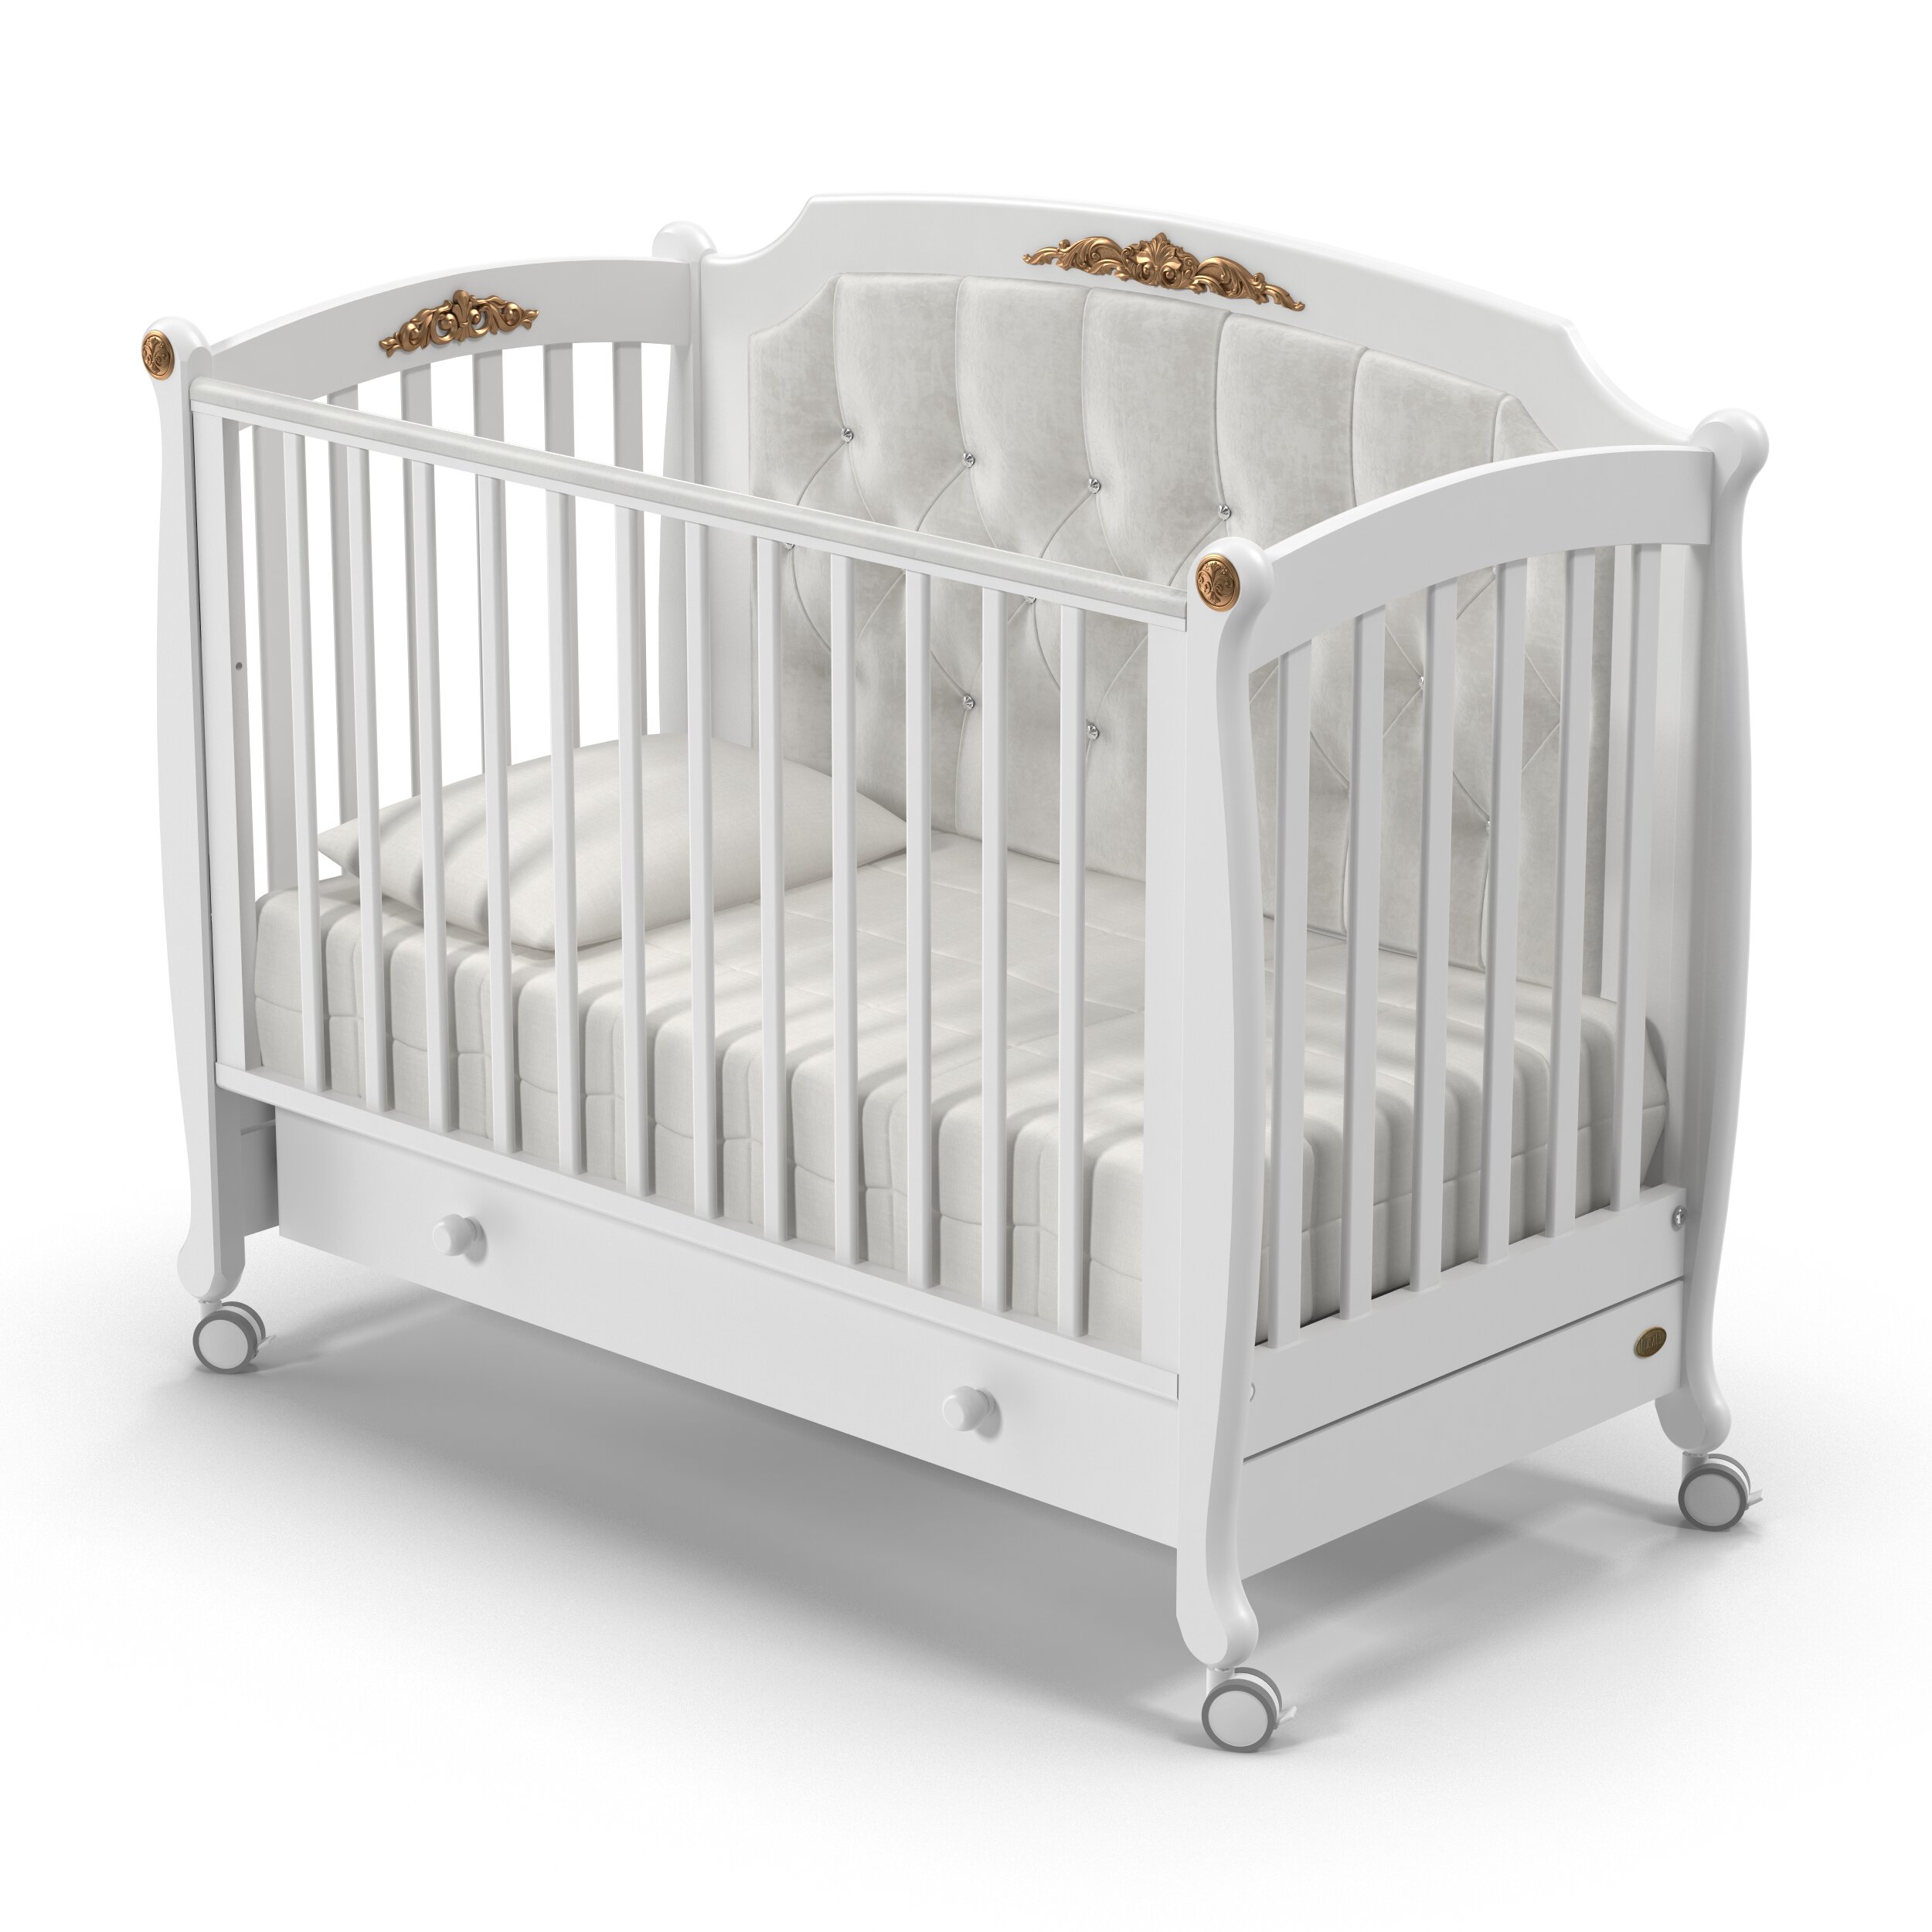 Детская кровать Nuovita Furore Bianco / Белый